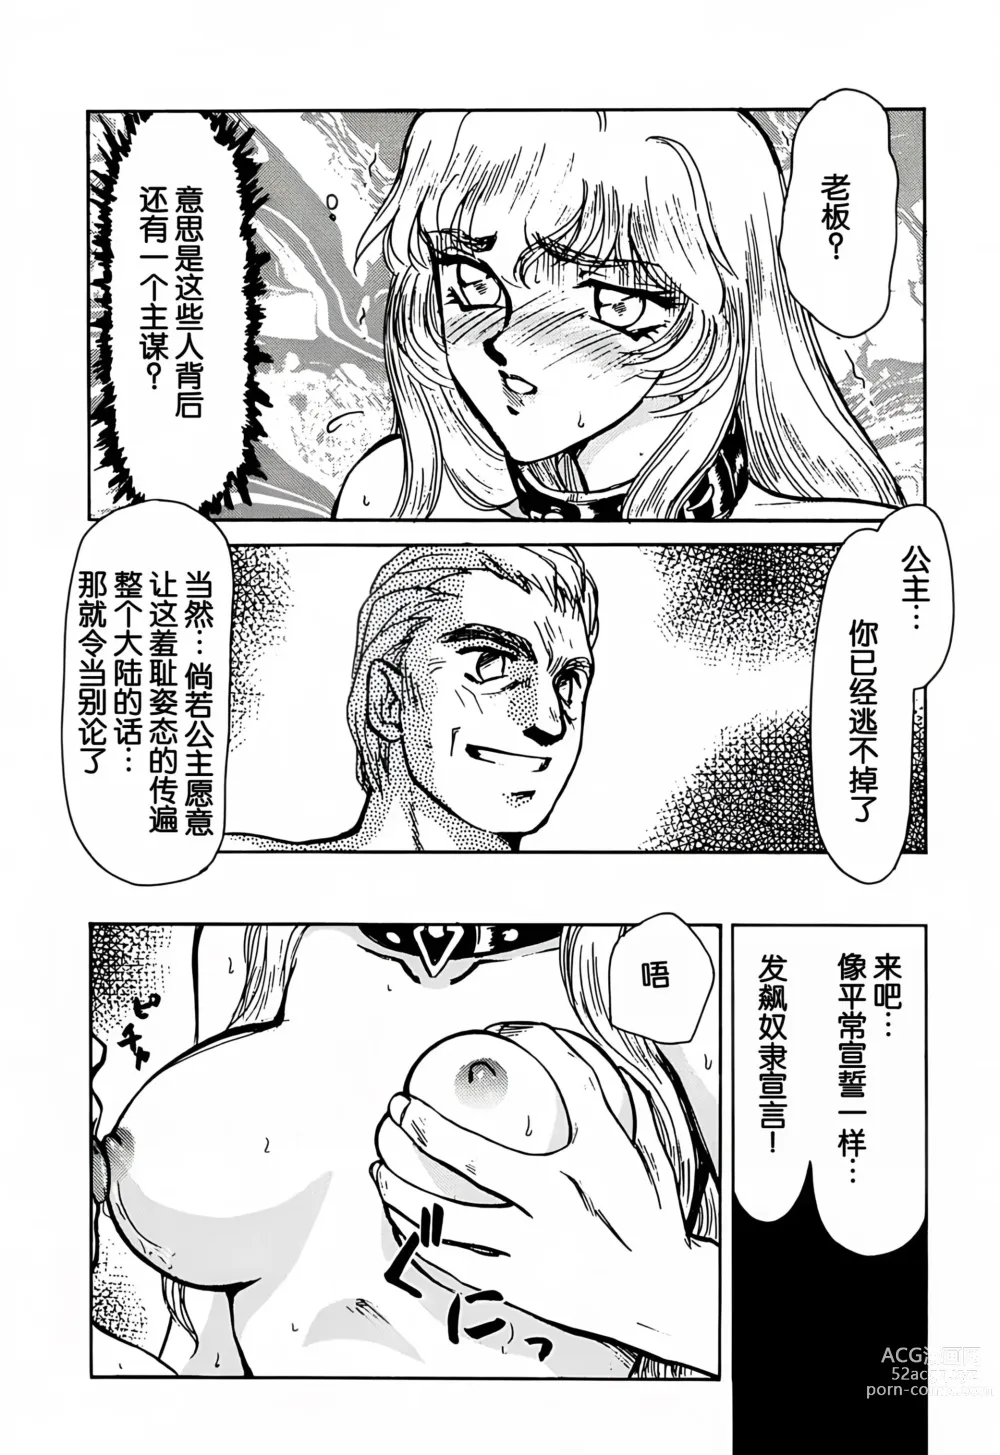 Page 52 of doujinshi Nise DRAGON BLOOD! 1.